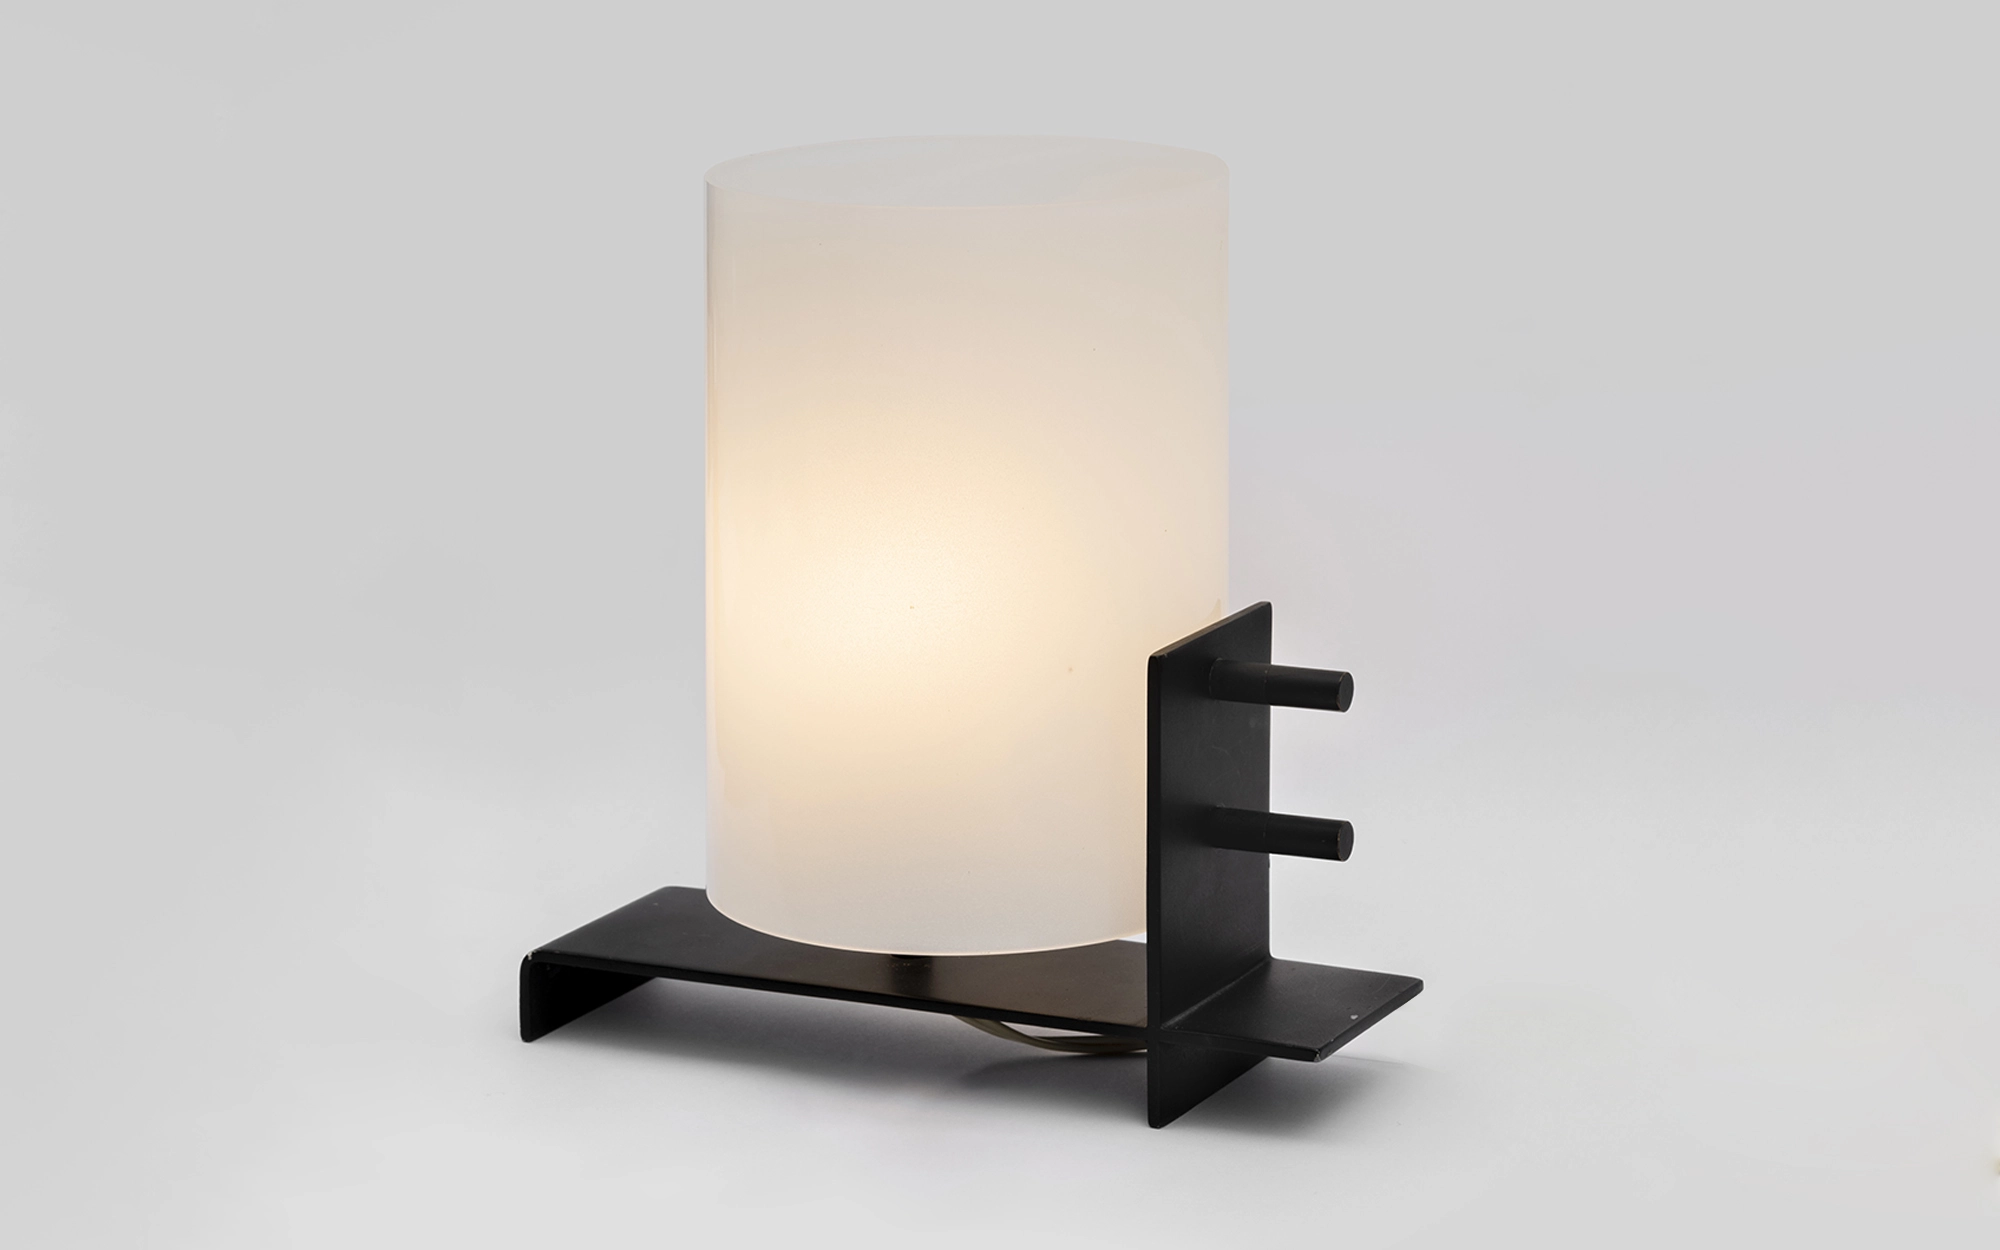 Lampe perspex & metal - Georges Frydman - table-light c66dd79a2f122d46bf02462f20045677- Galerie kreo